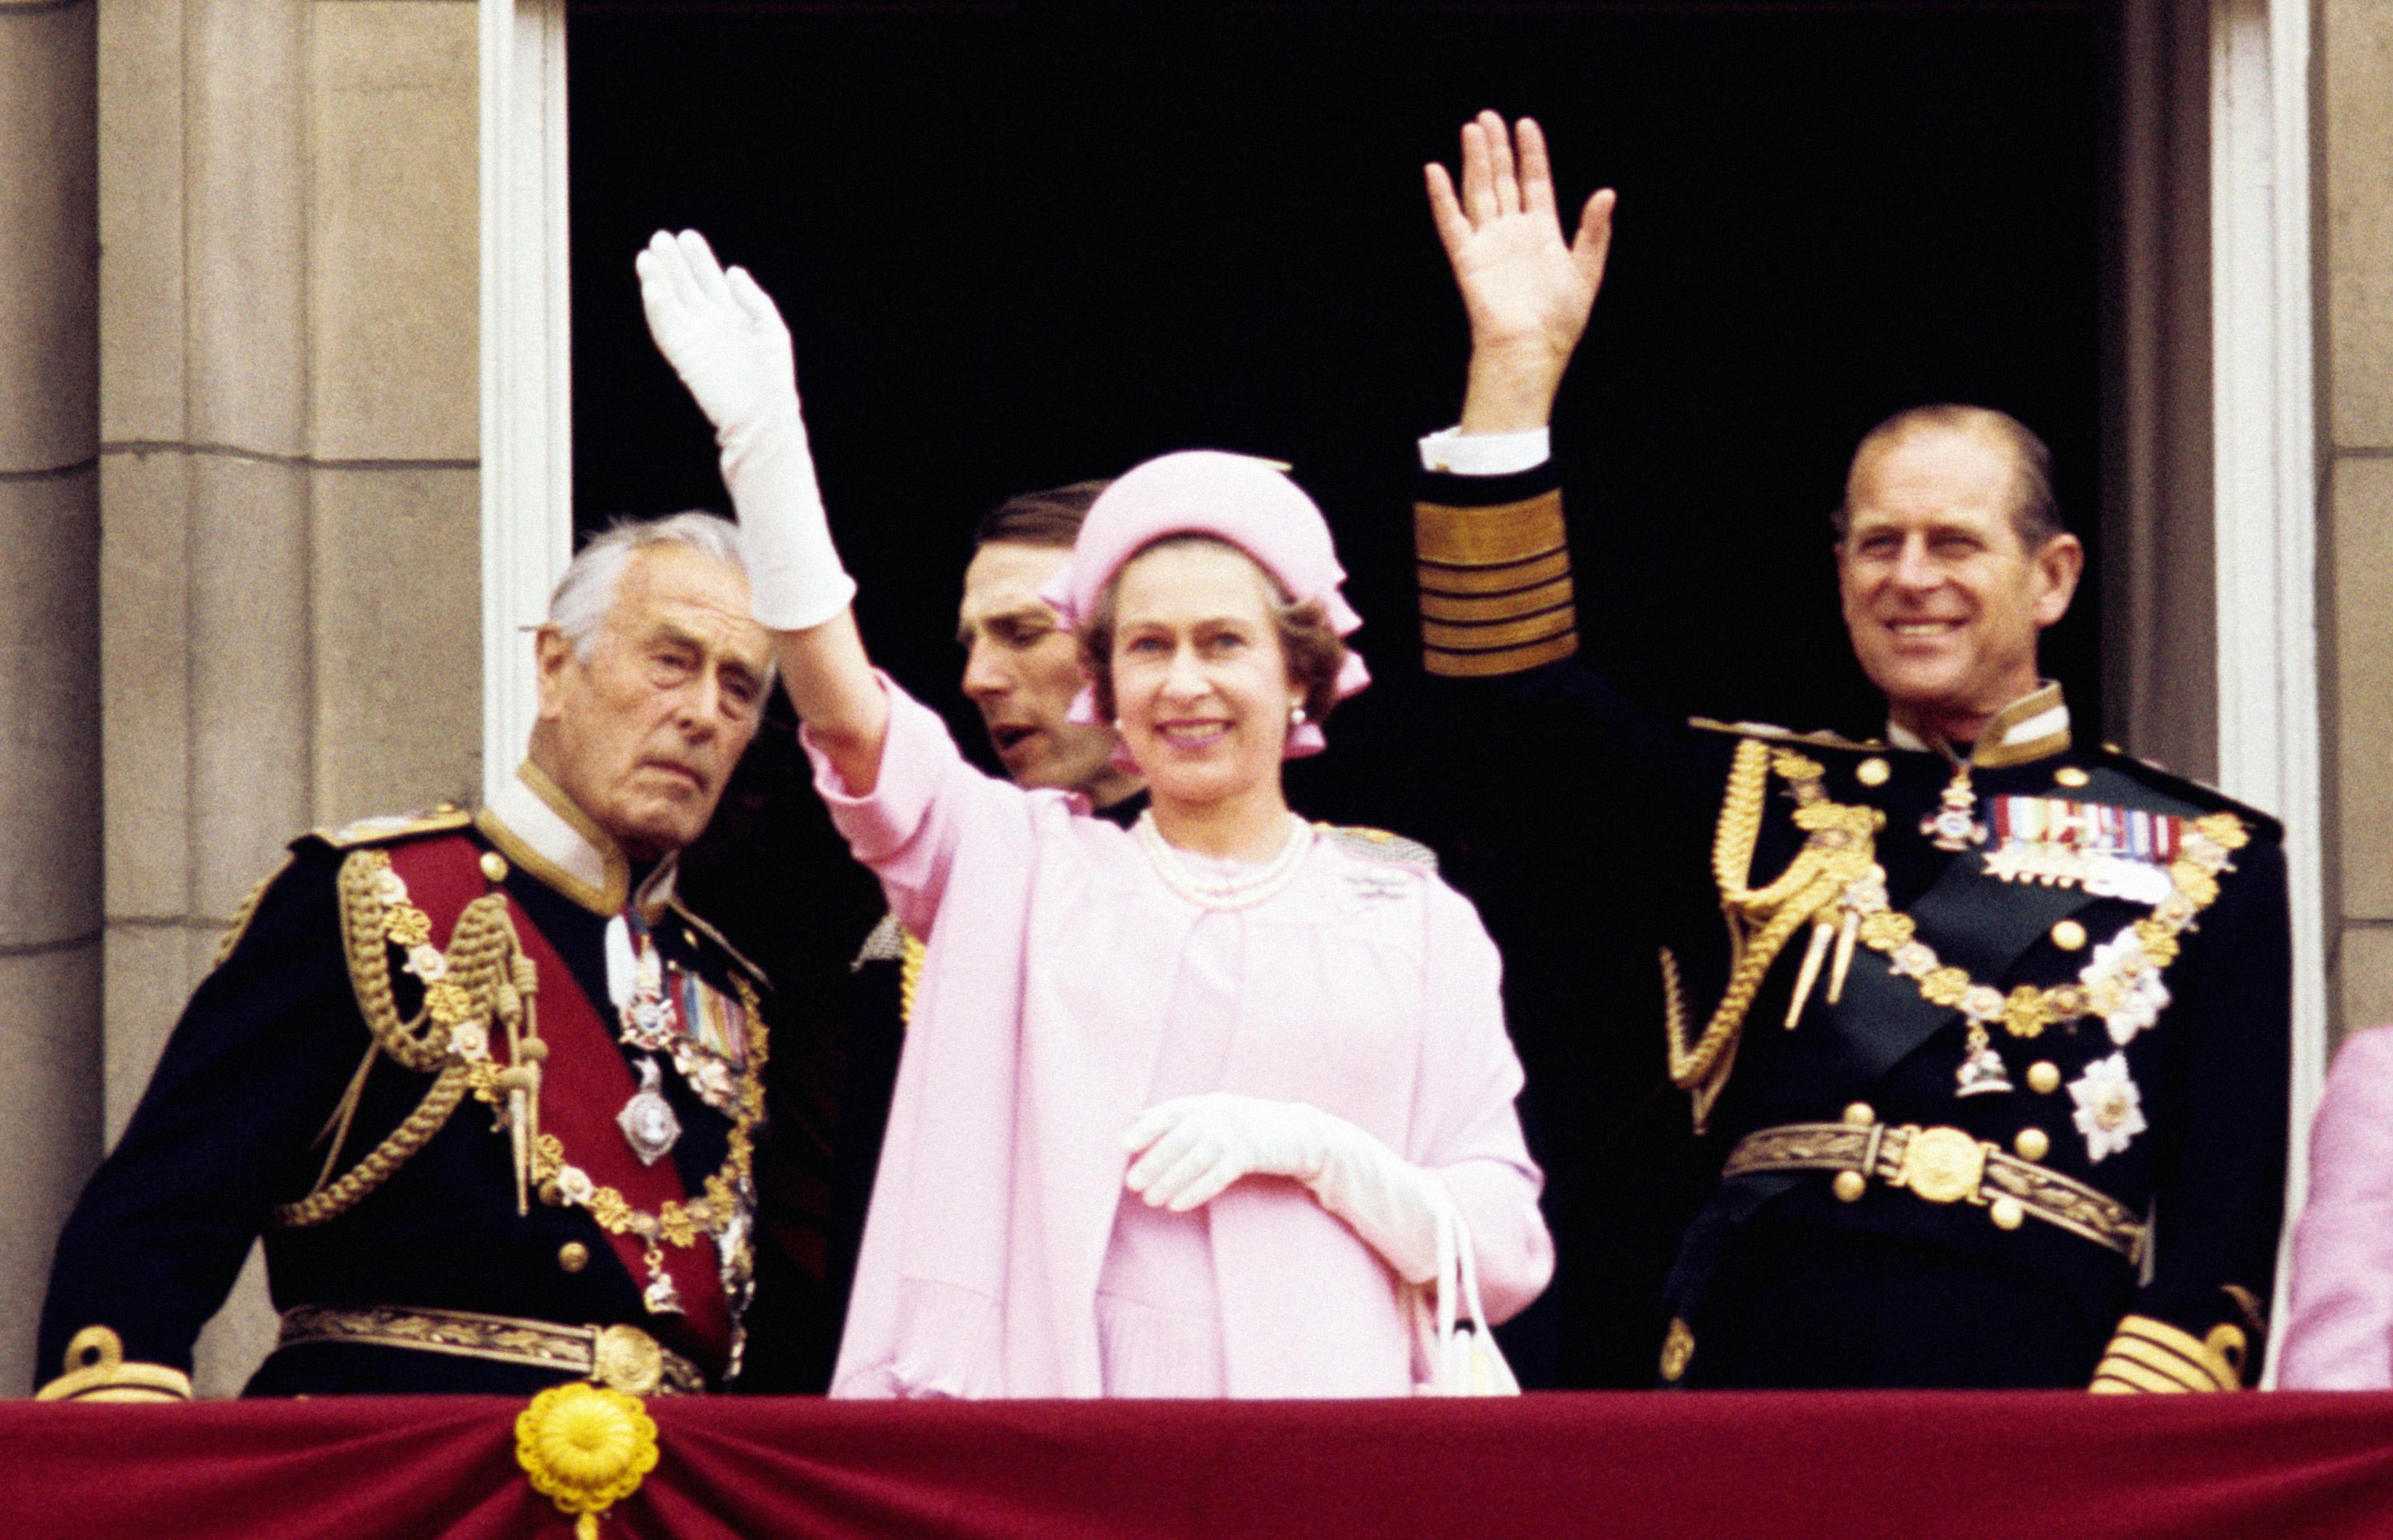 Queen Elizabeth II and philip waving from a balcony 